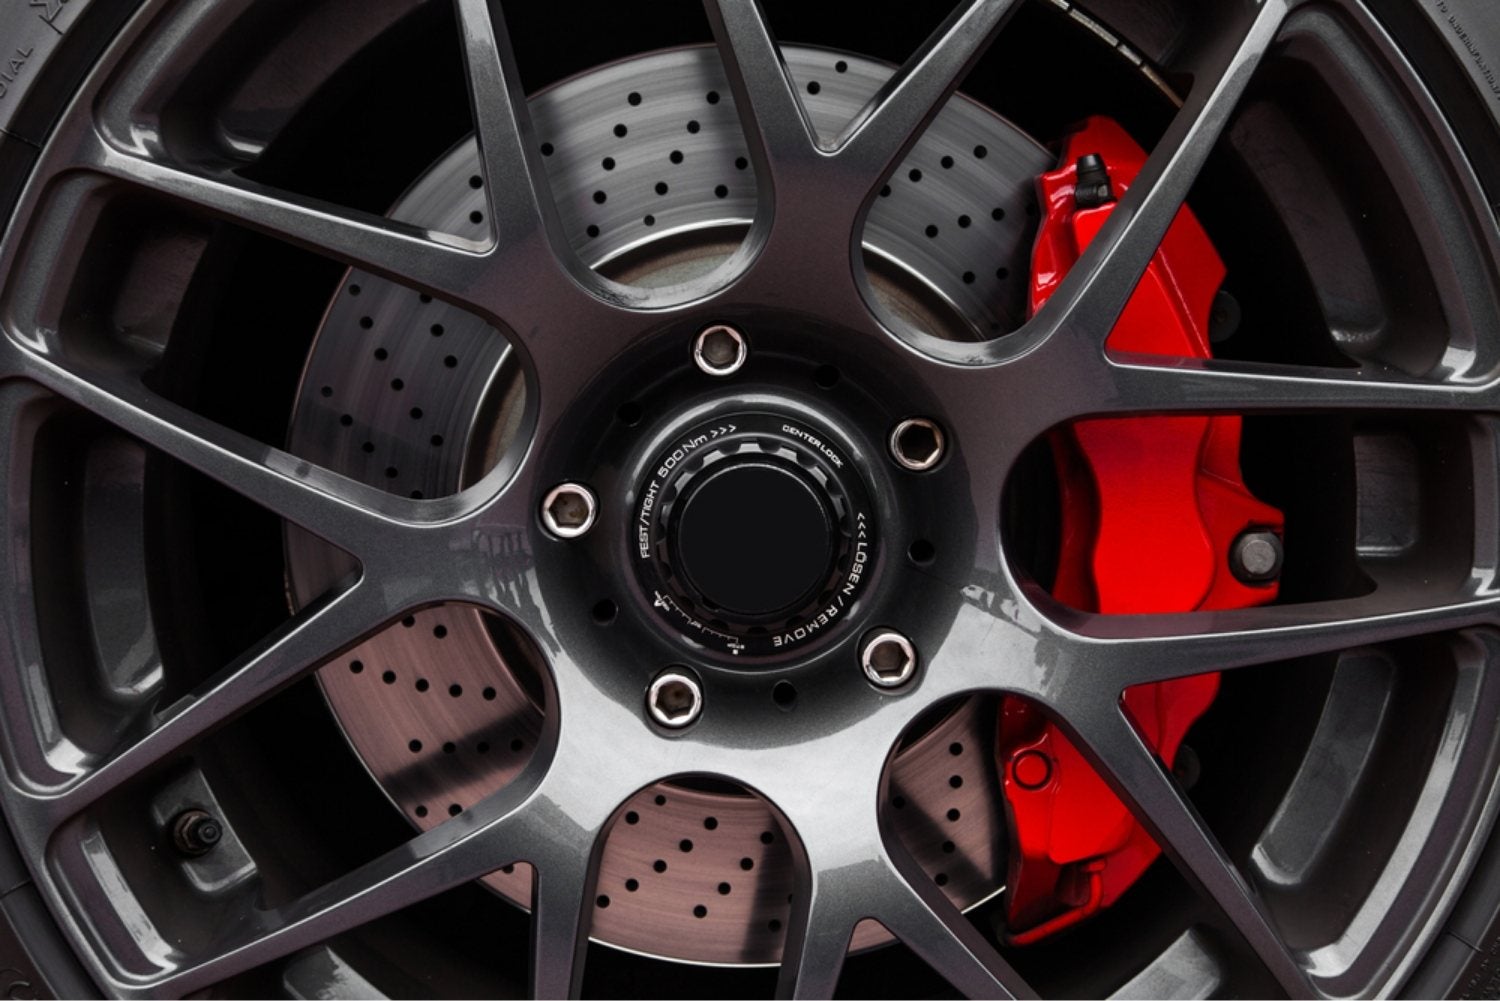 Close-up image of a car's wheel